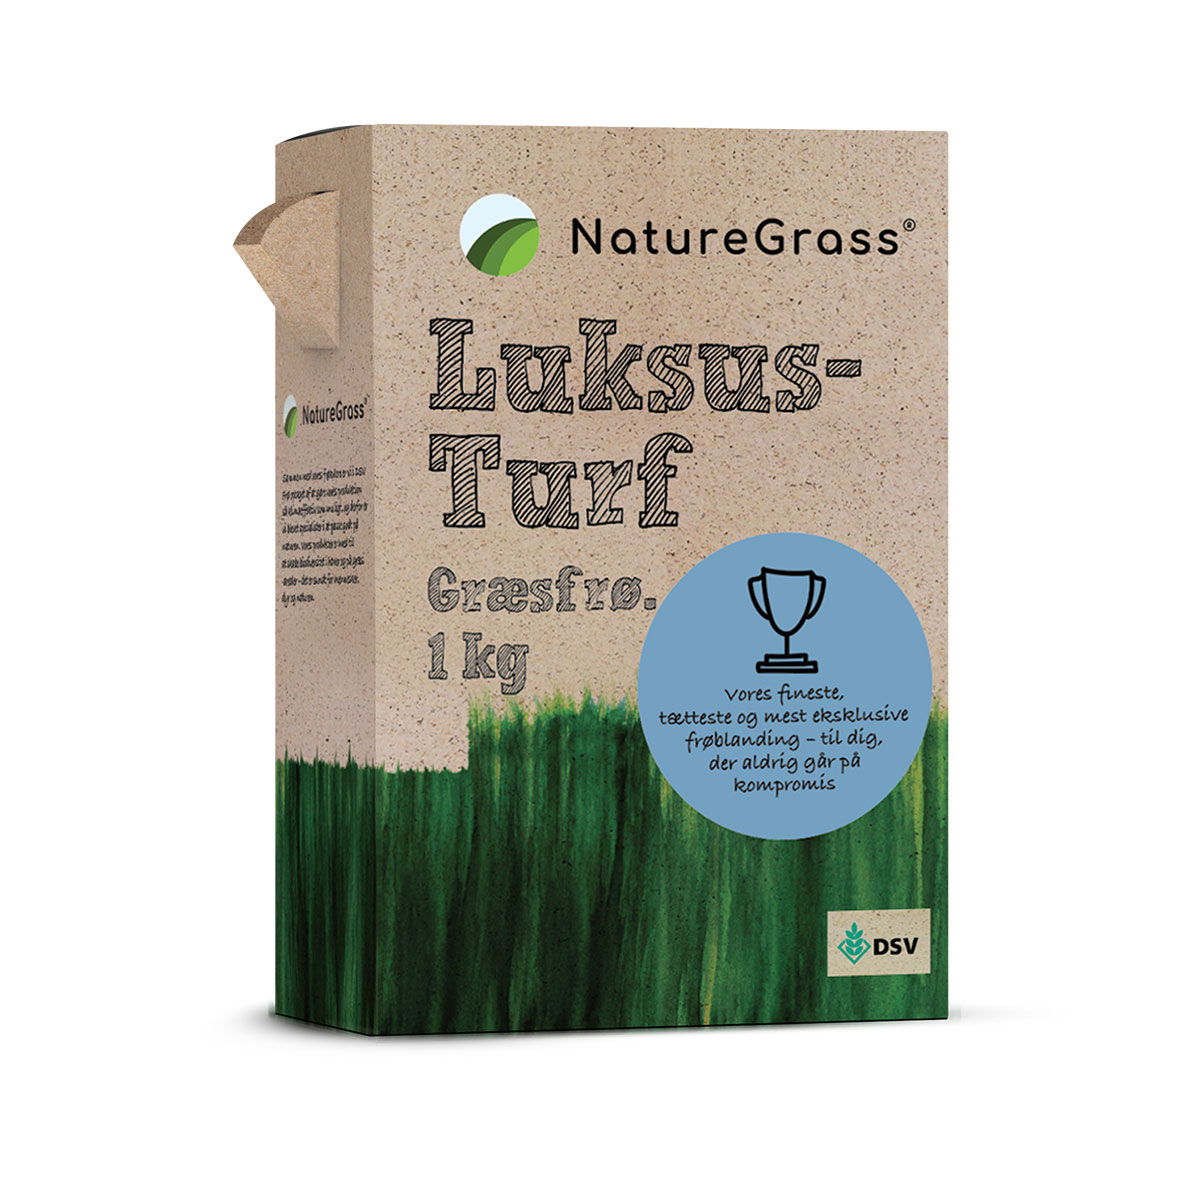 NatureGrass Luksus-Turf græsfrø, 1 kg